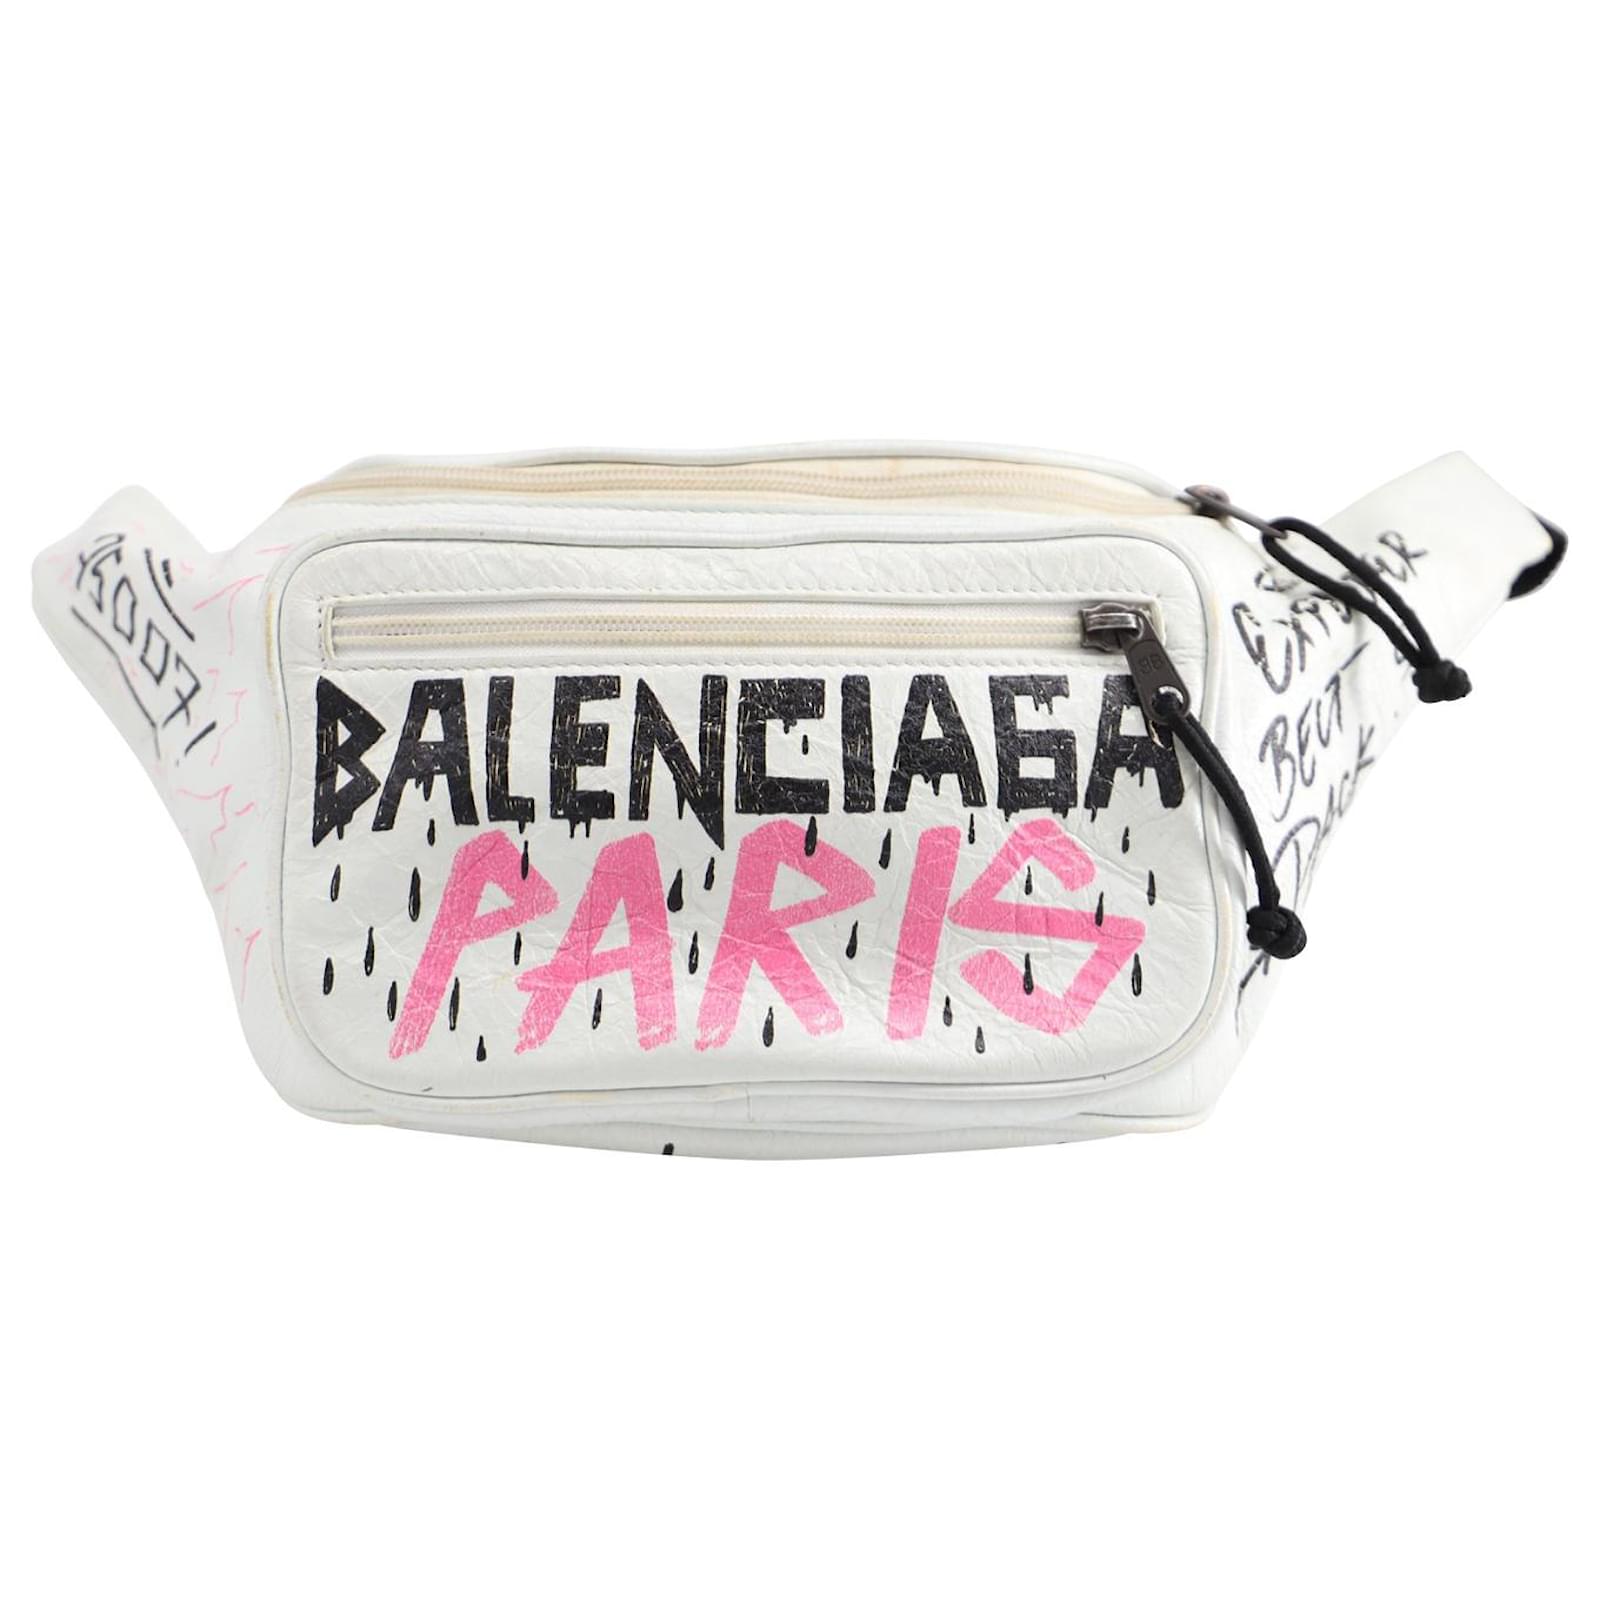 BALENCIAGA Hour glass XS bag in graffiti print leather  White  Balenciaga  mini bag 592833 1BWHY online on GIGLIOCOM